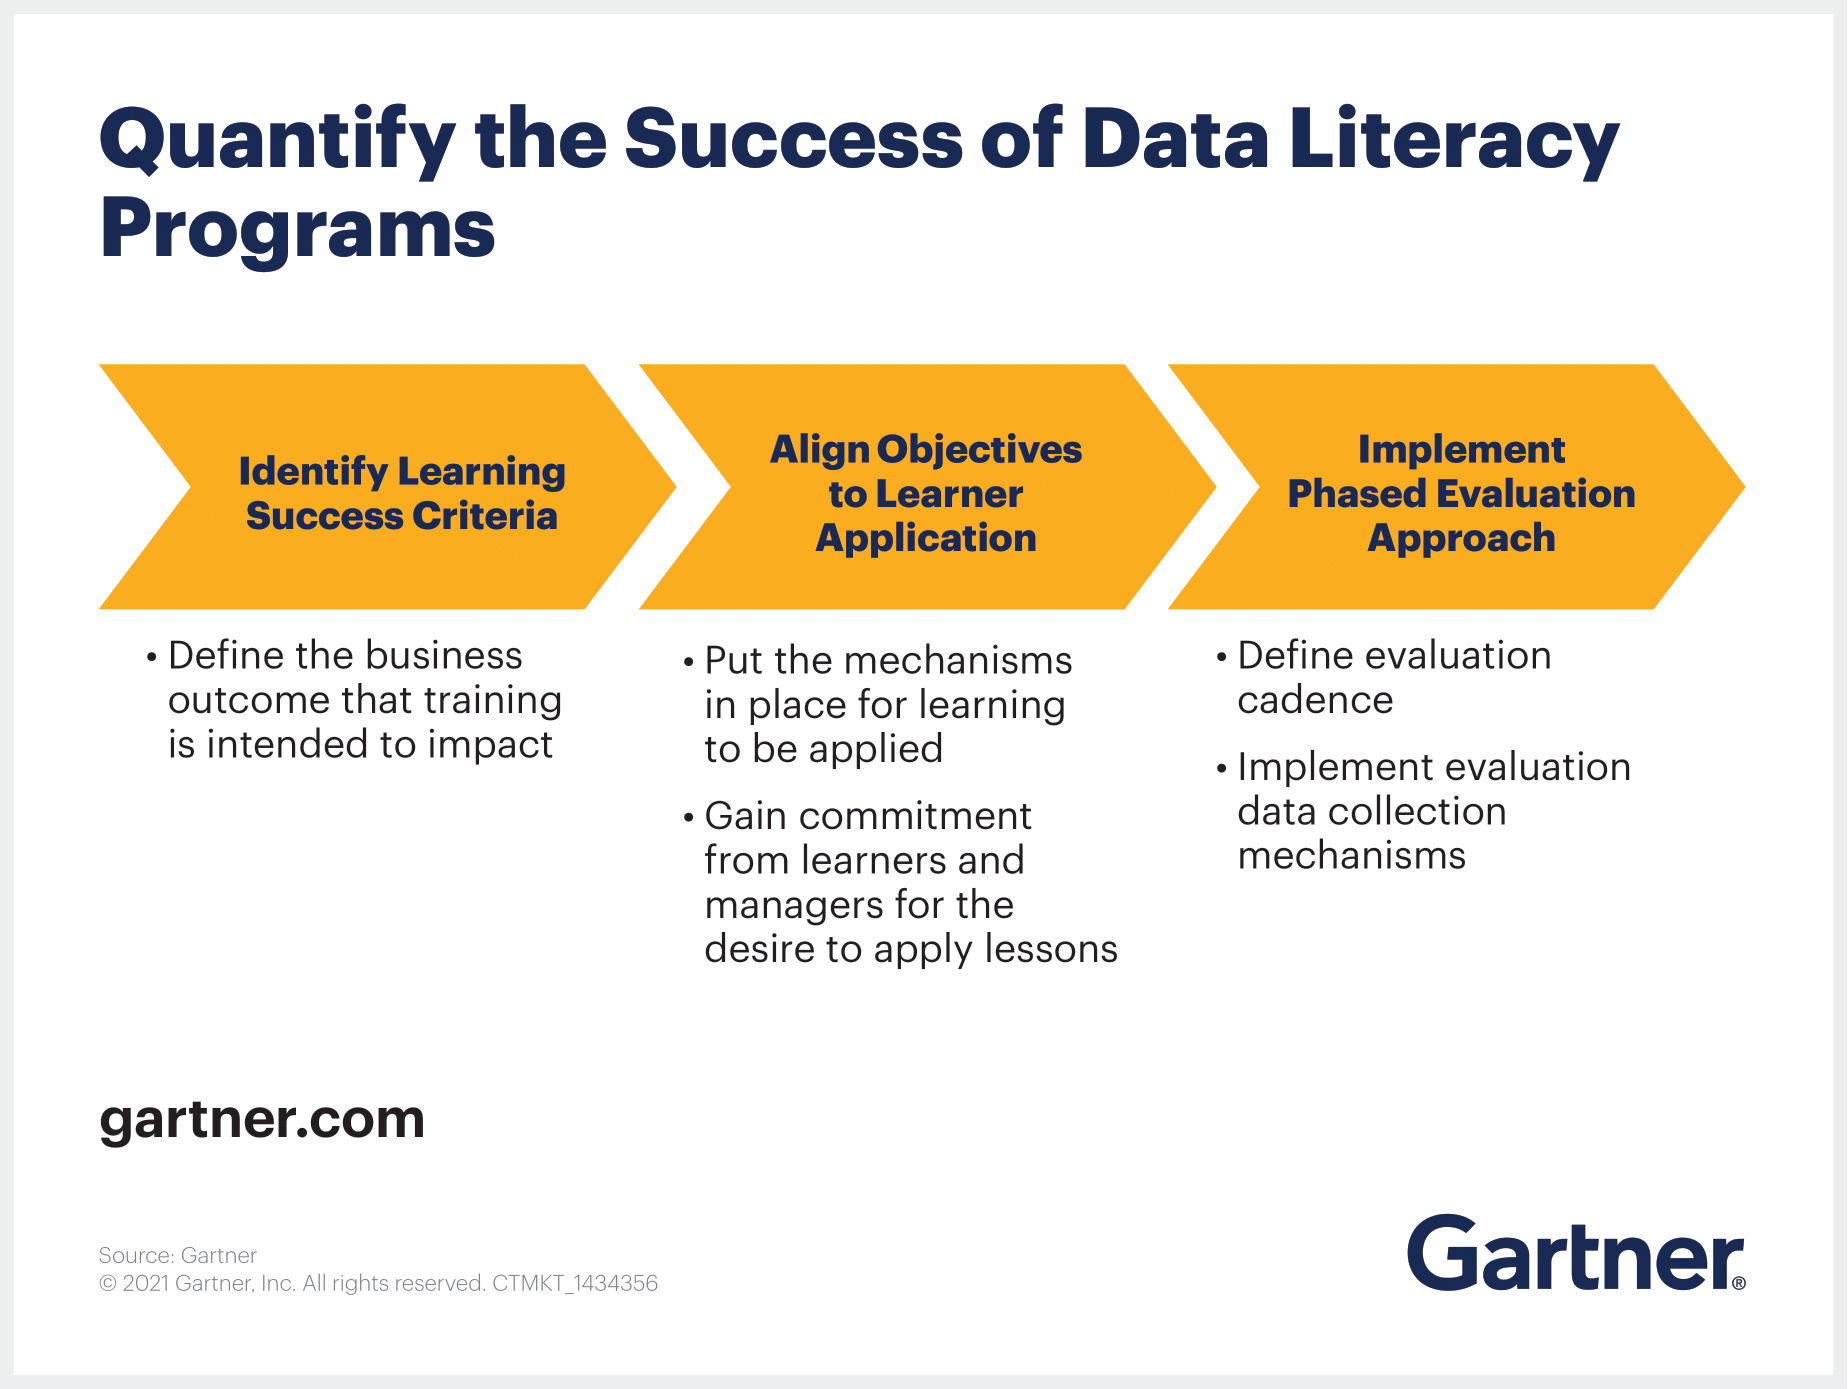 Quantify the success of data literacy programs